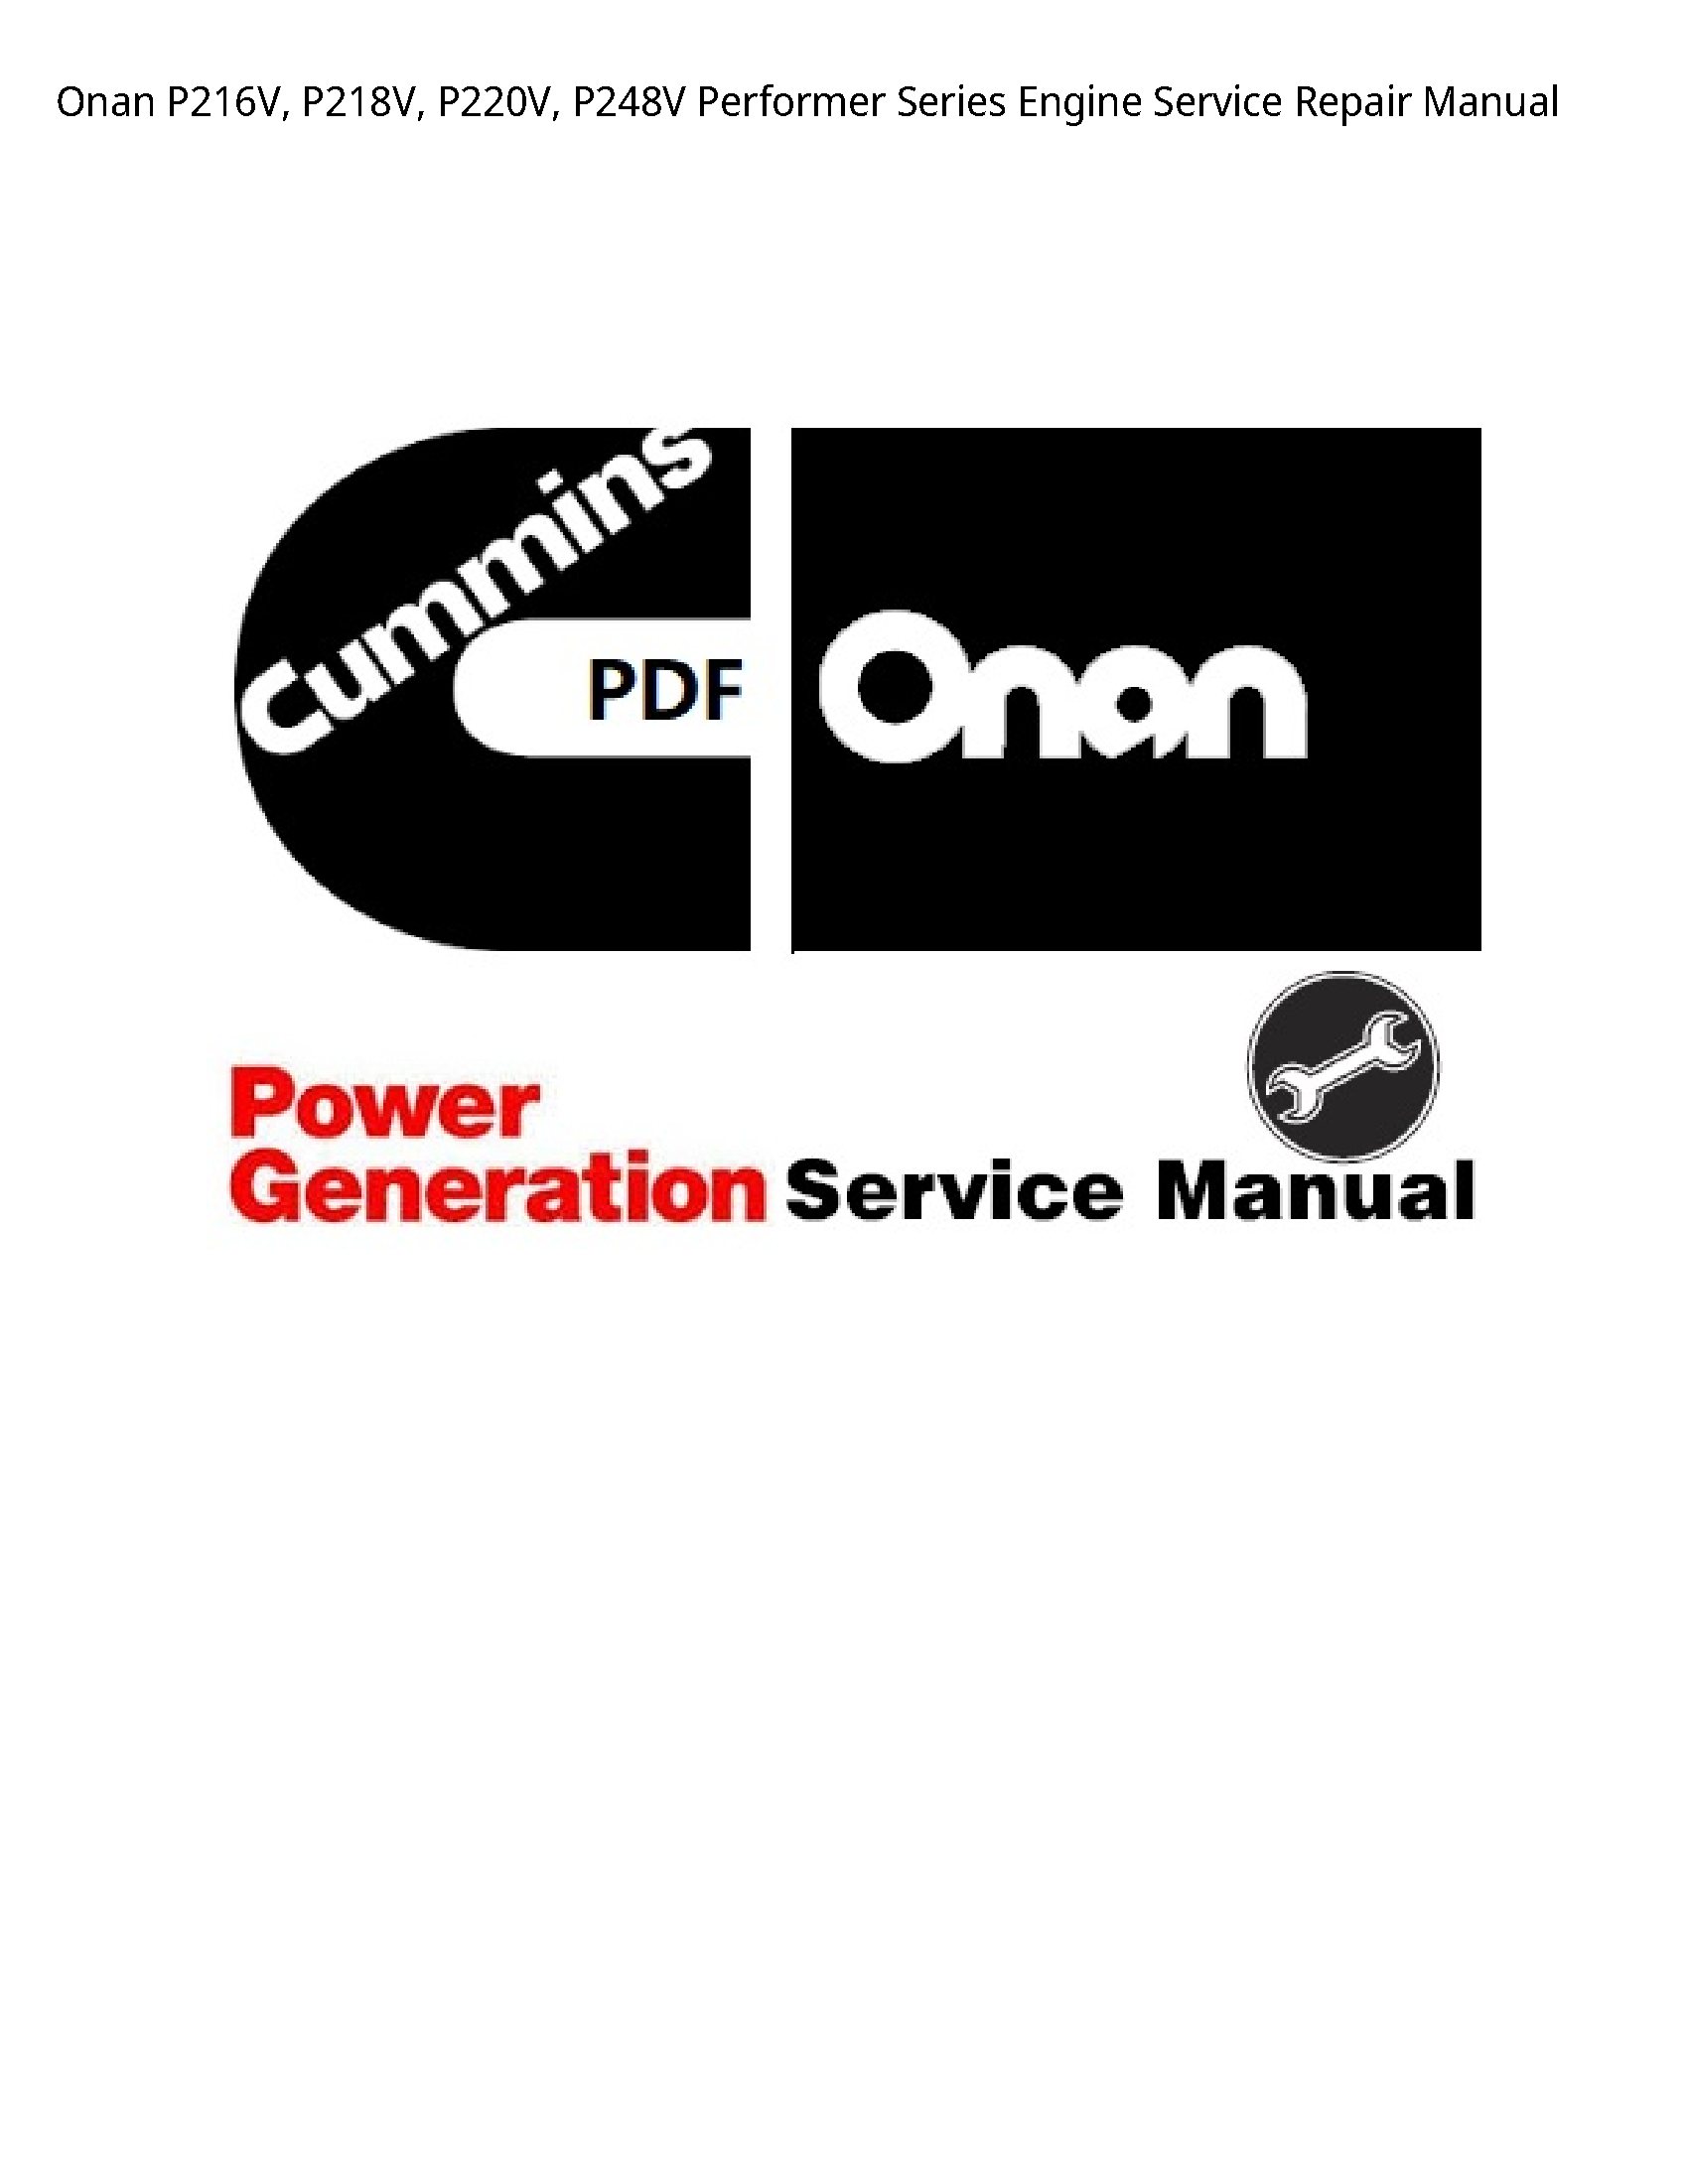 Onan P216V Performer Series Engine manual